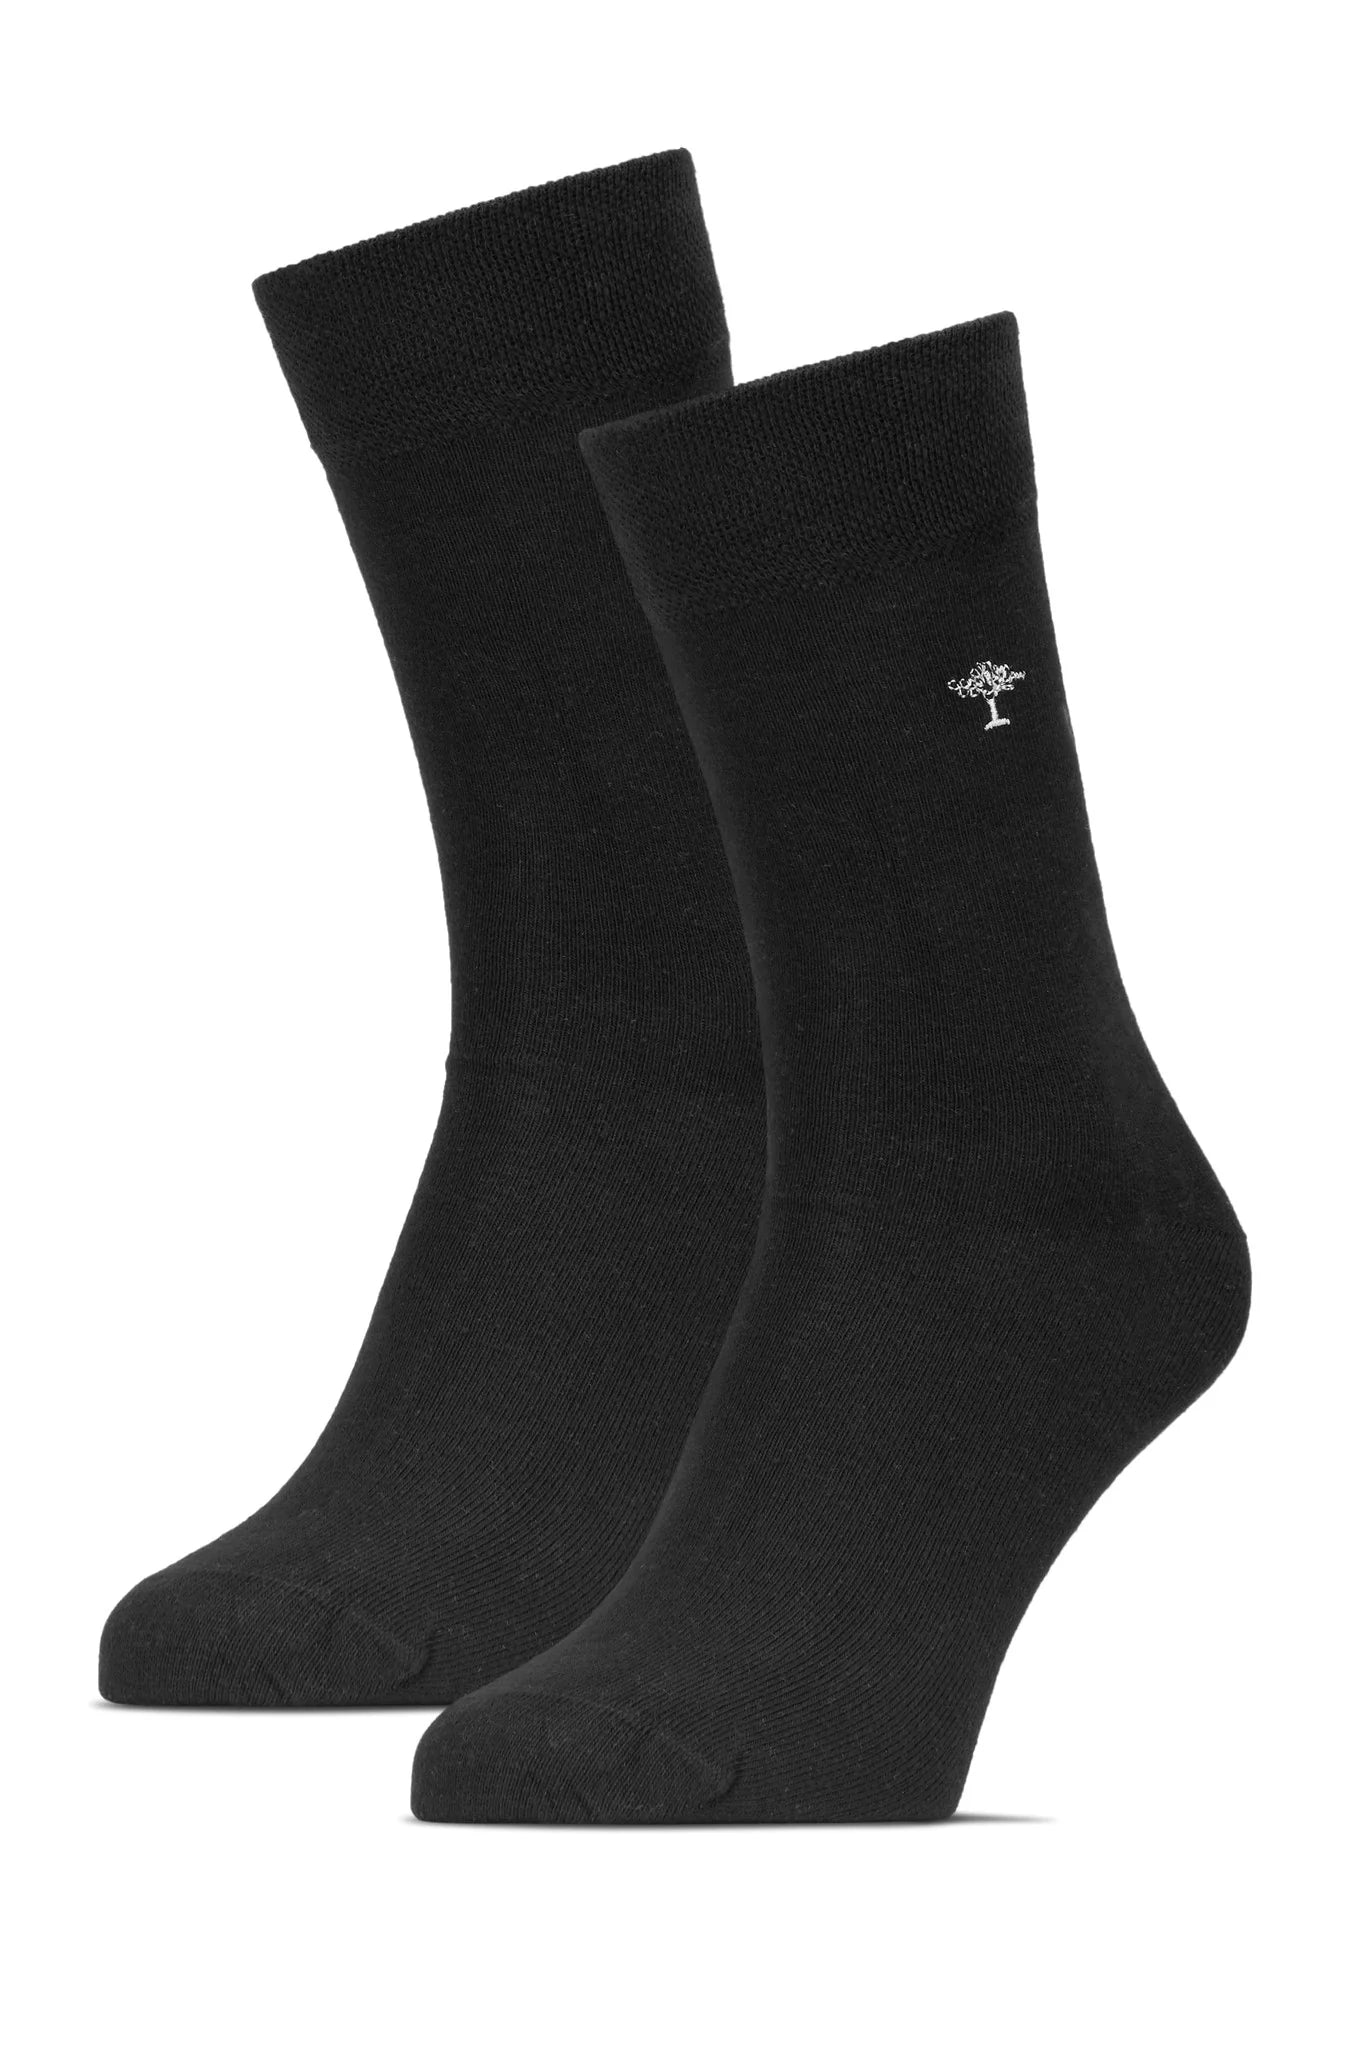 FYNCH HATTON Logo Socks - Men's Double Pack – Black